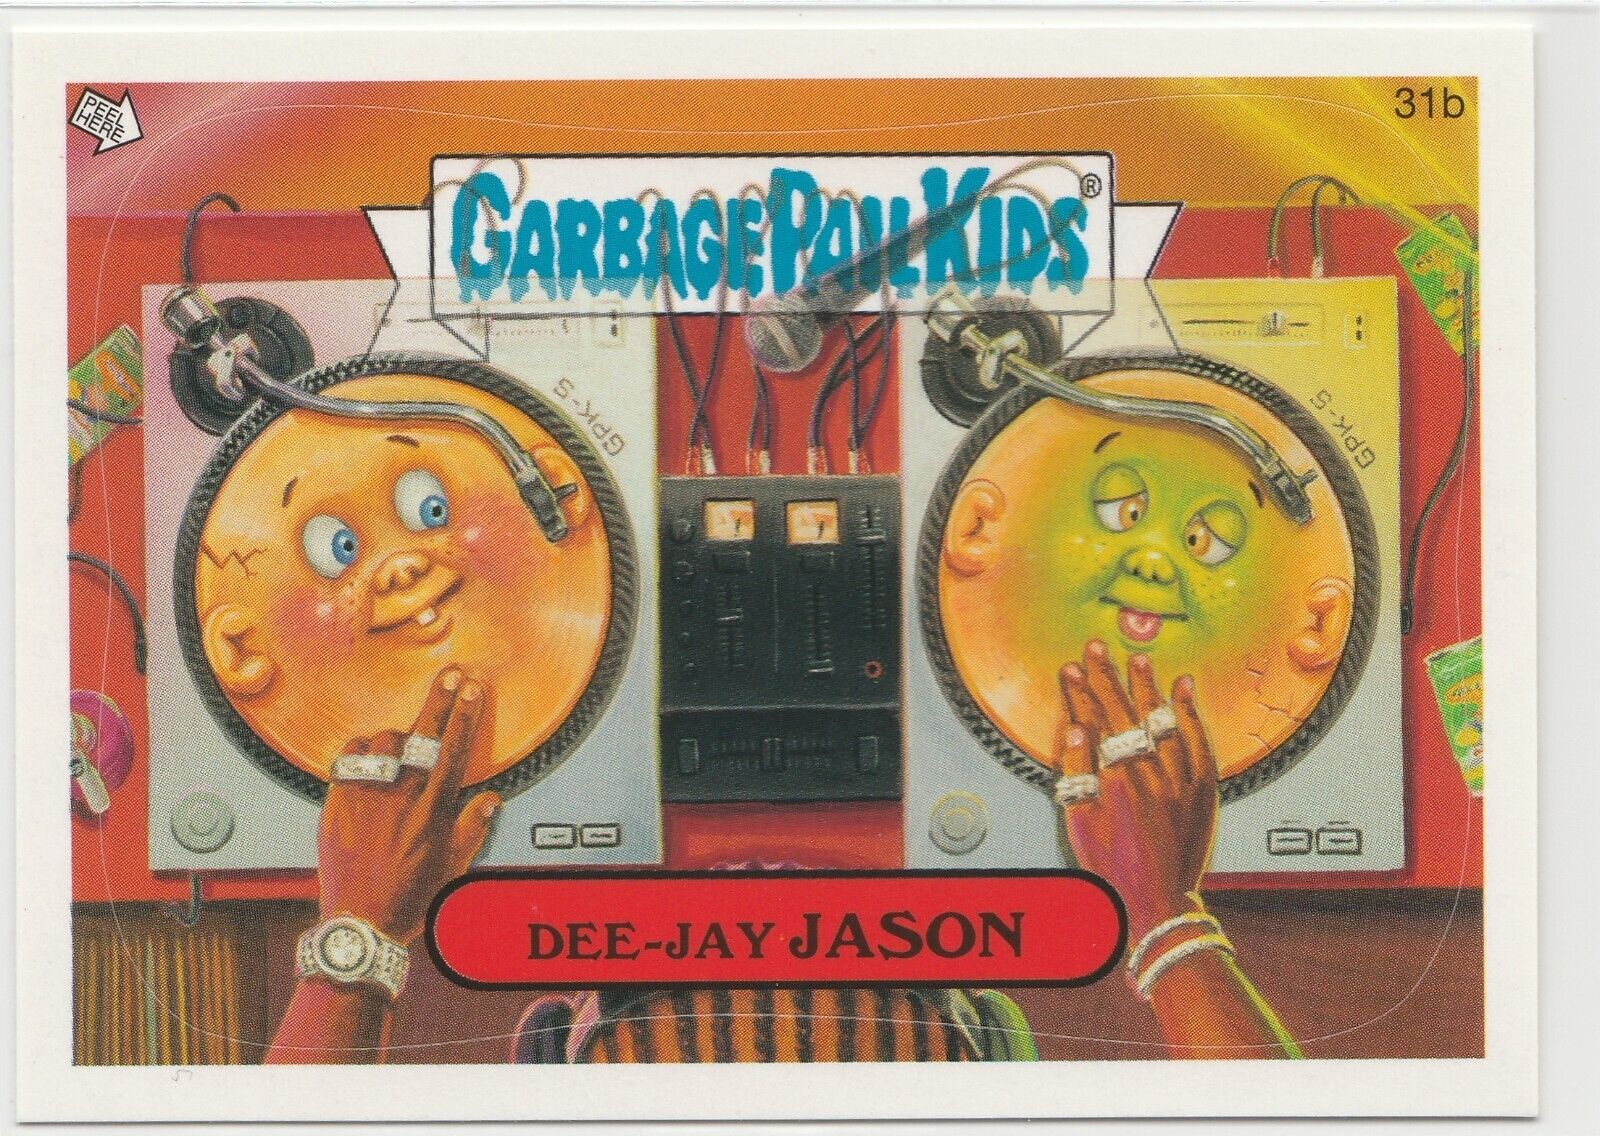 Garbage Pail Kids GPK Dee-Jay Jason turntablist disc jockey vinyl record spin DJ